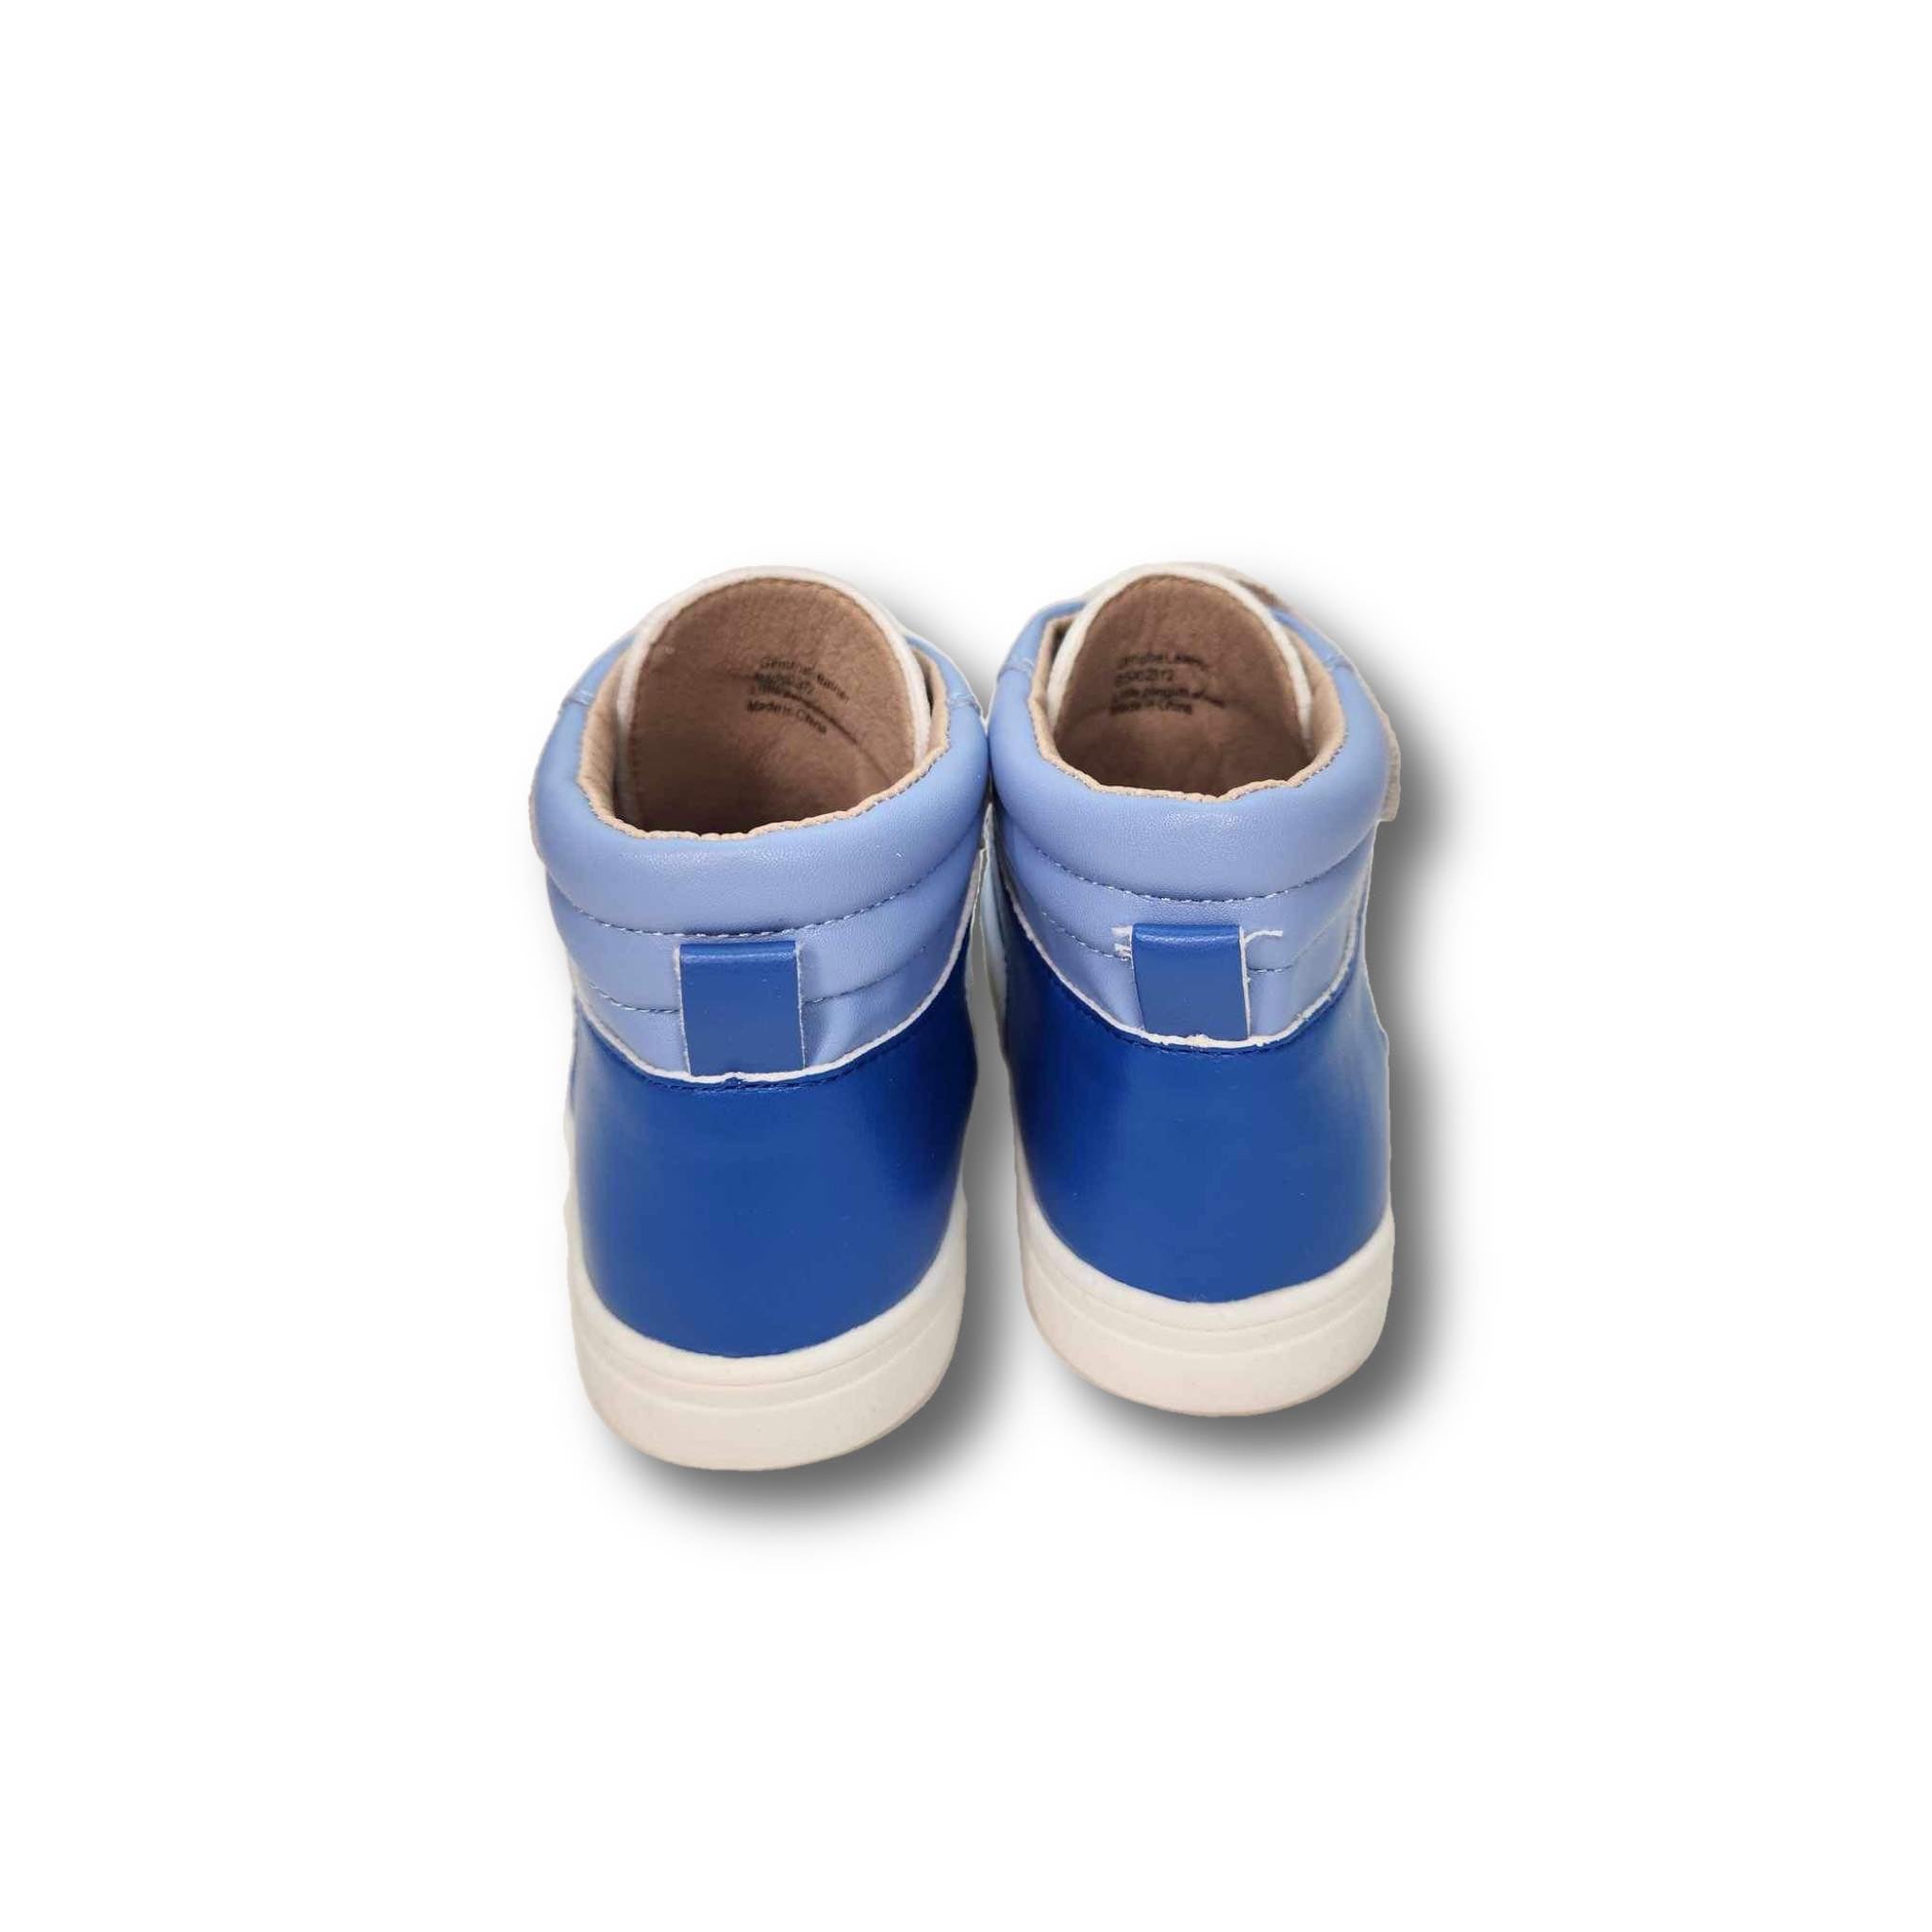 RYKER Children's High-Top Sneaker in Colorblock Blue Leather